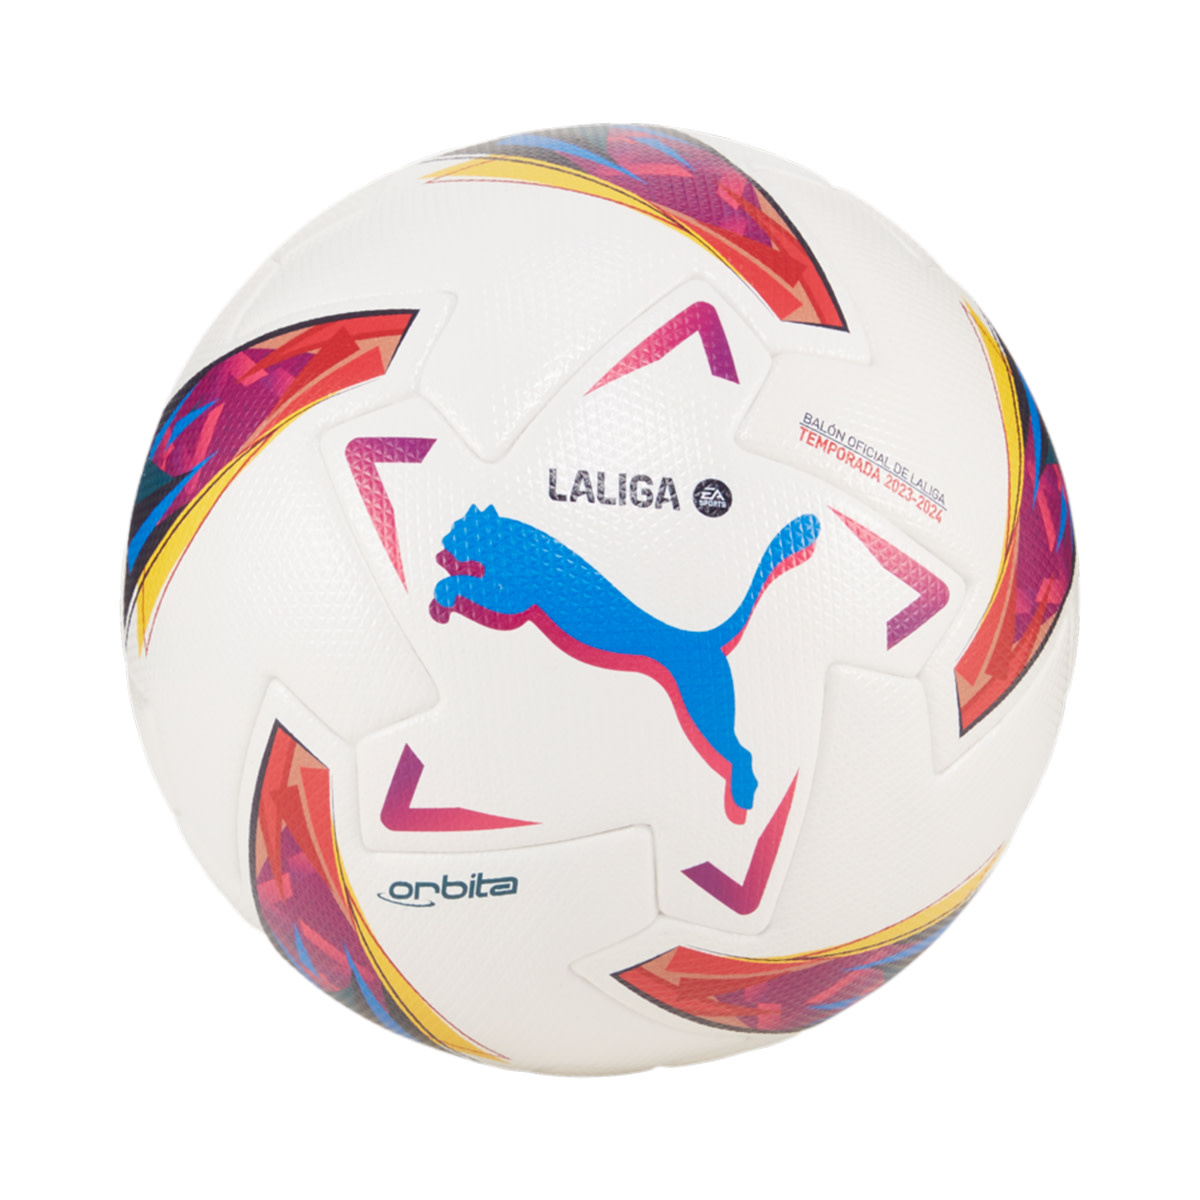 Puma Orbita La Liga 1 Ball 23/24 (FIFA QUALITY PRO) - SoccerWorld